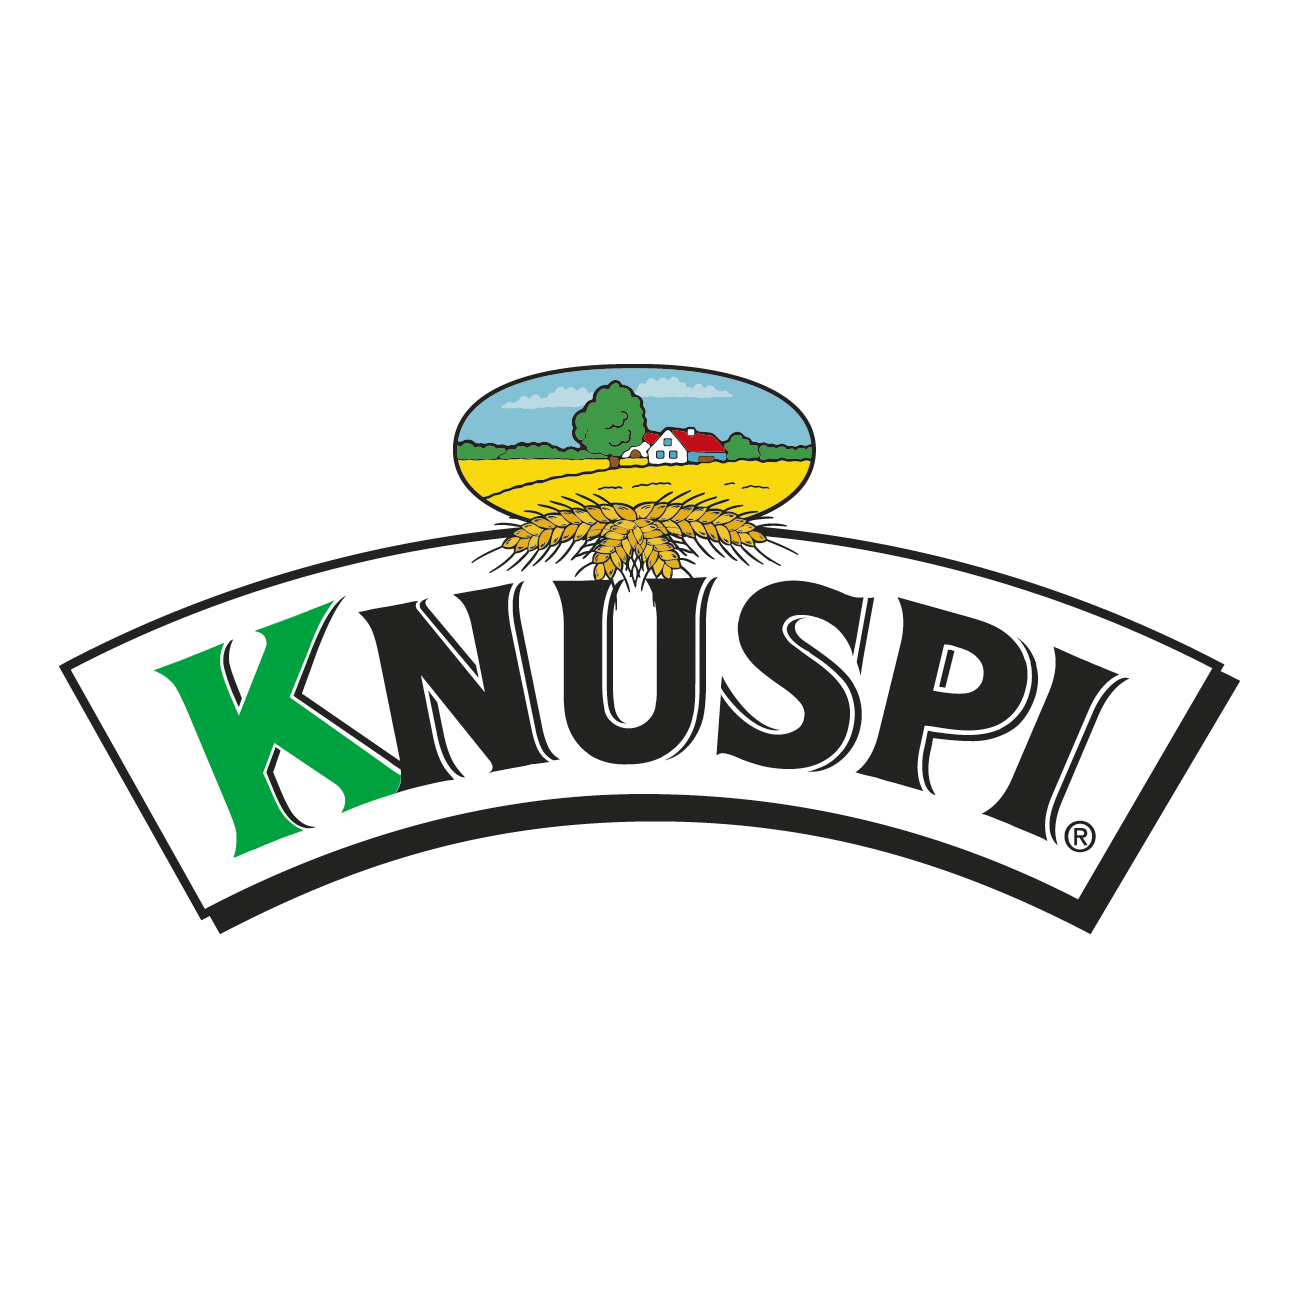 Knuspi-square-white.png